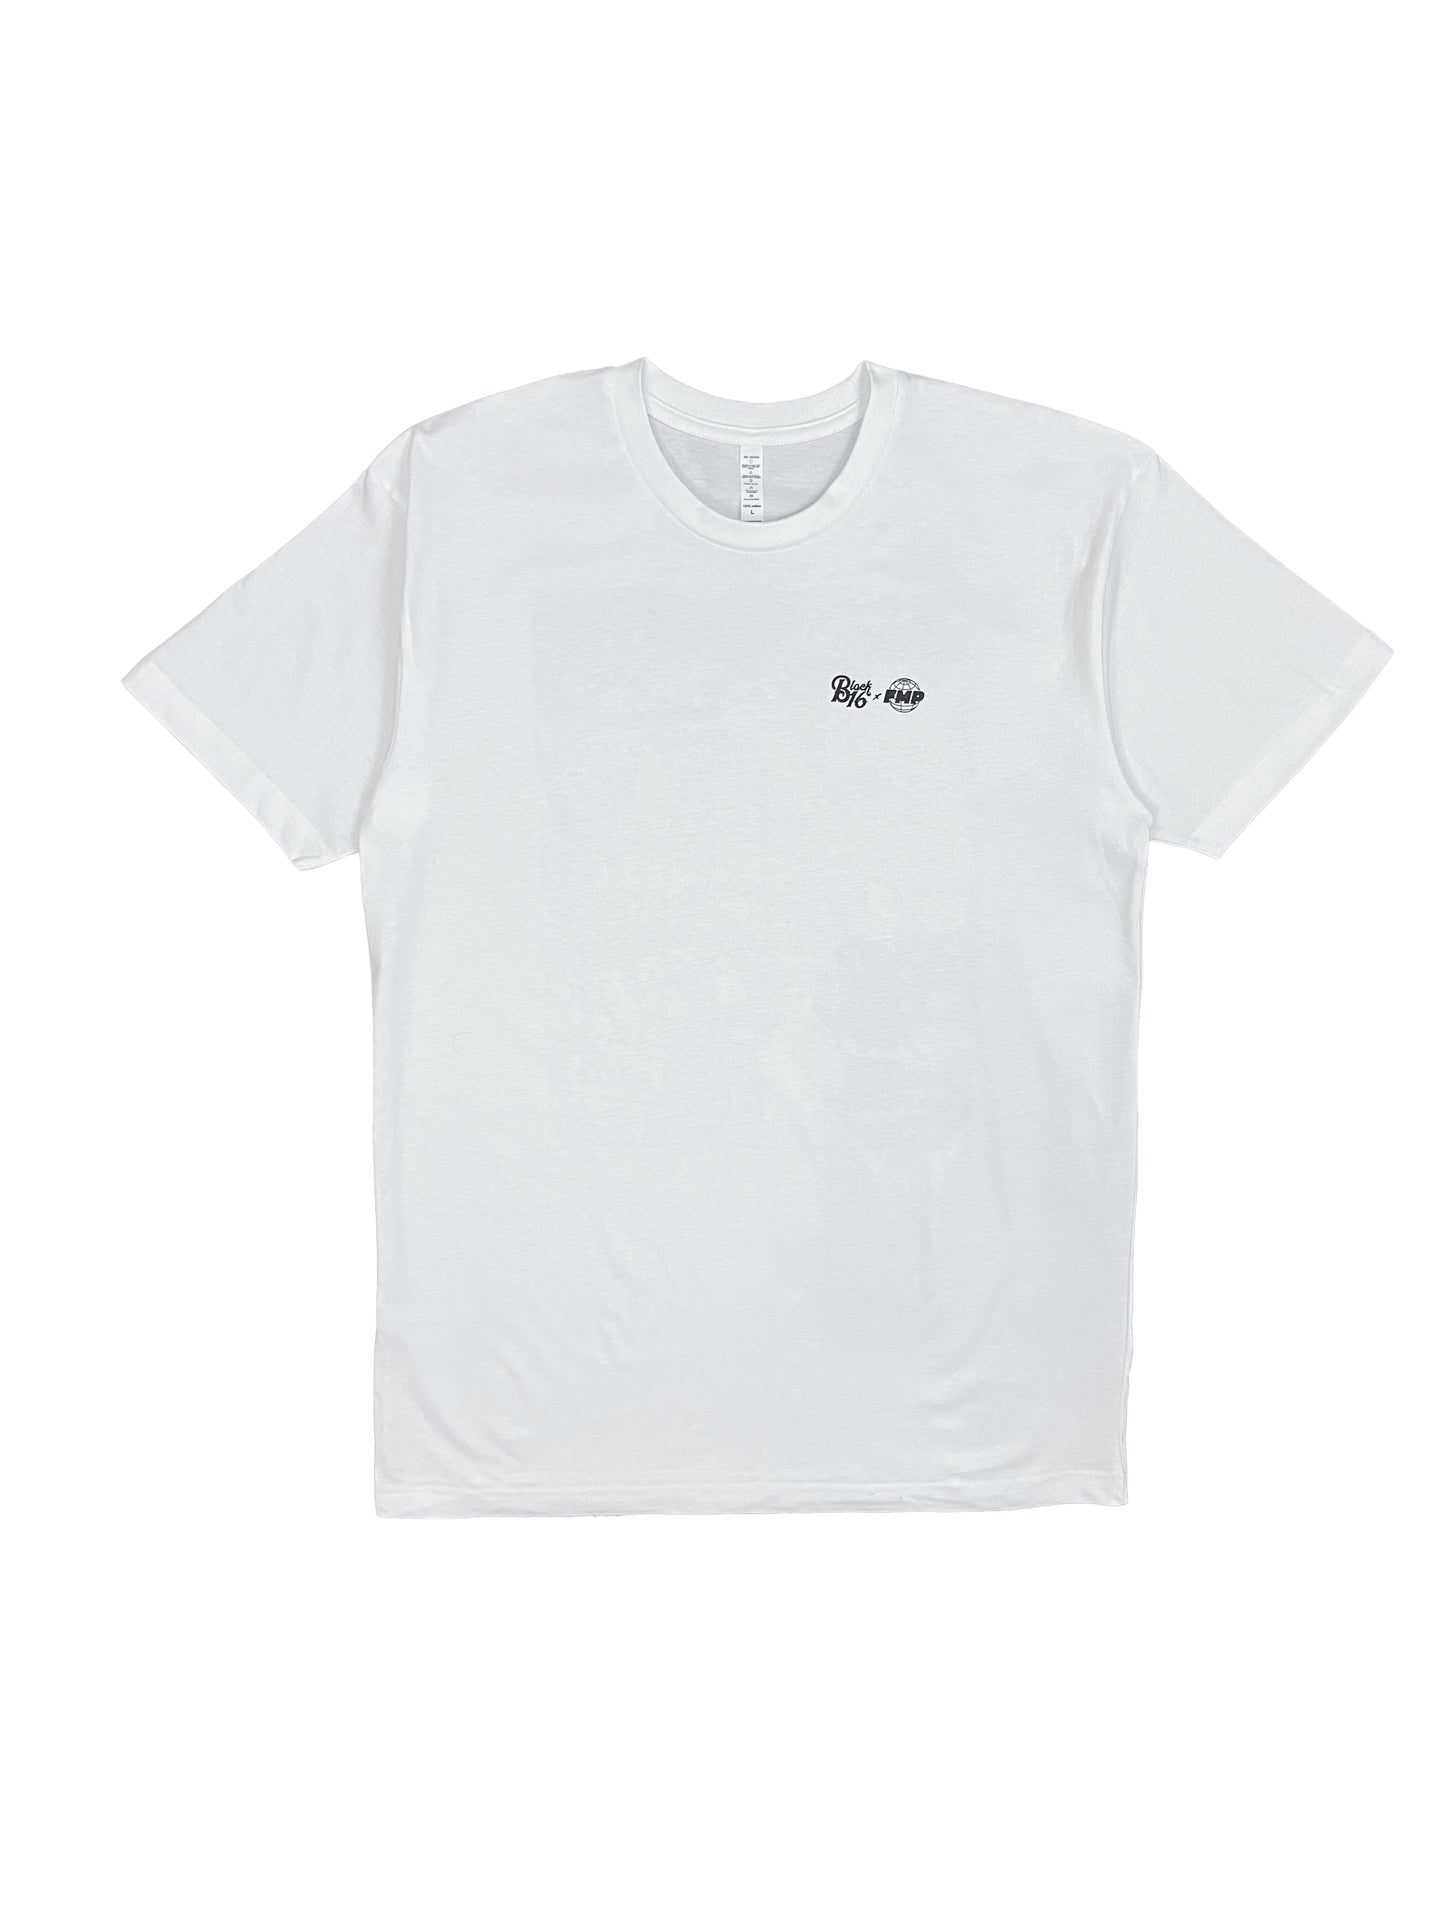 FMP x B16 Collab T-Shirt